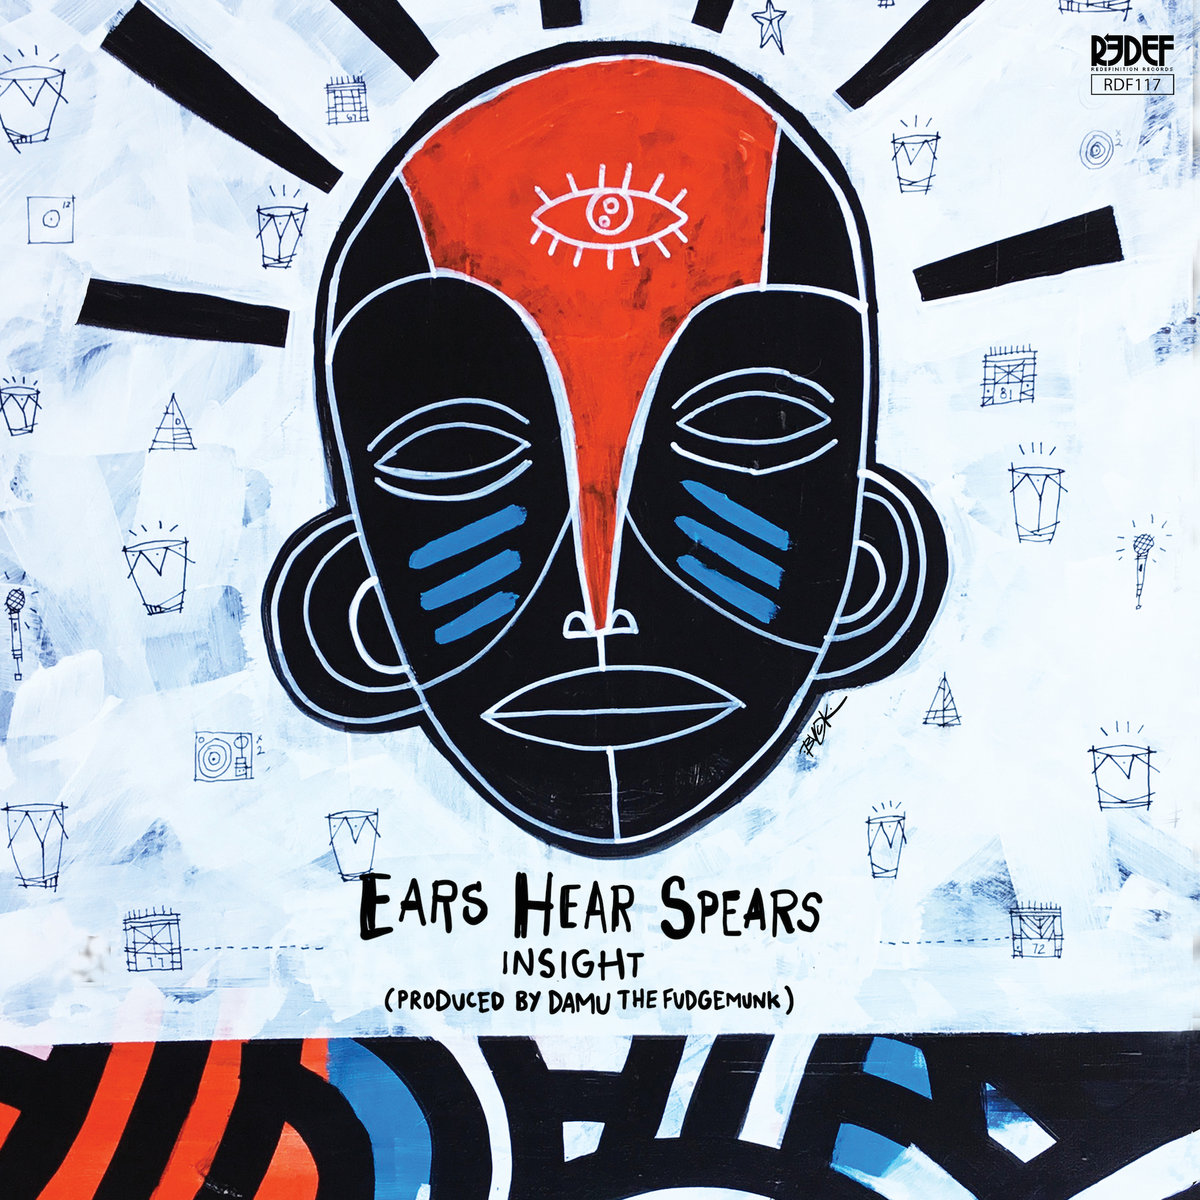 Stream the Full Album ‘Ears Hear Spears’ by Insight & Damu The Fudgemunk